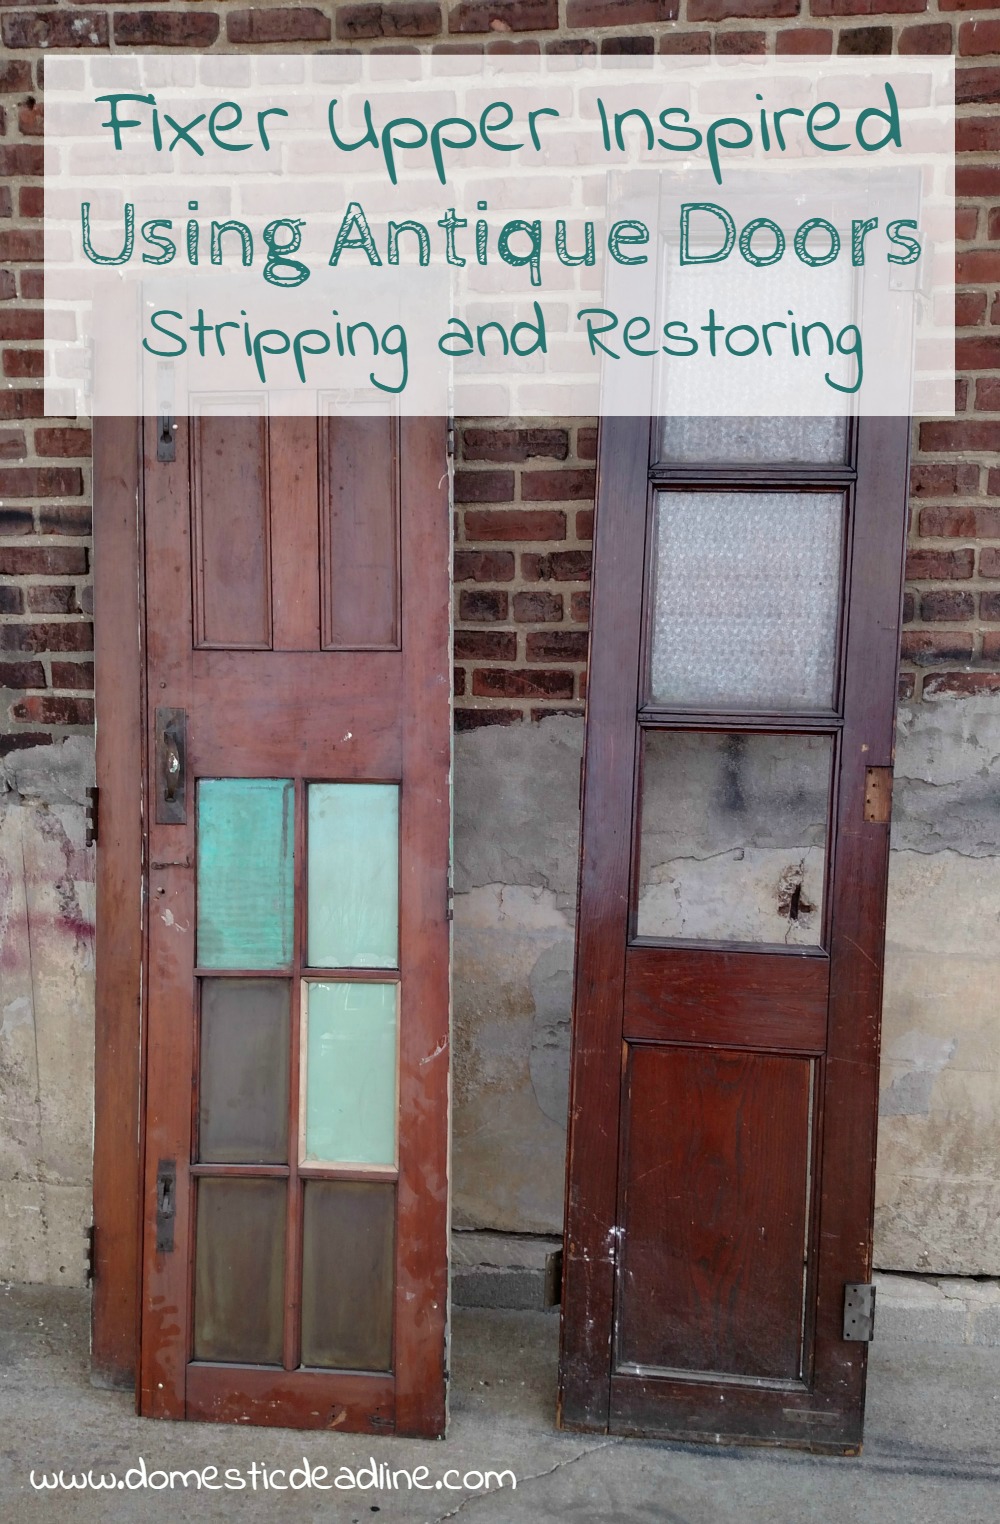 Stripping and Restoring Antique Doors - Fixer Upper Inspired